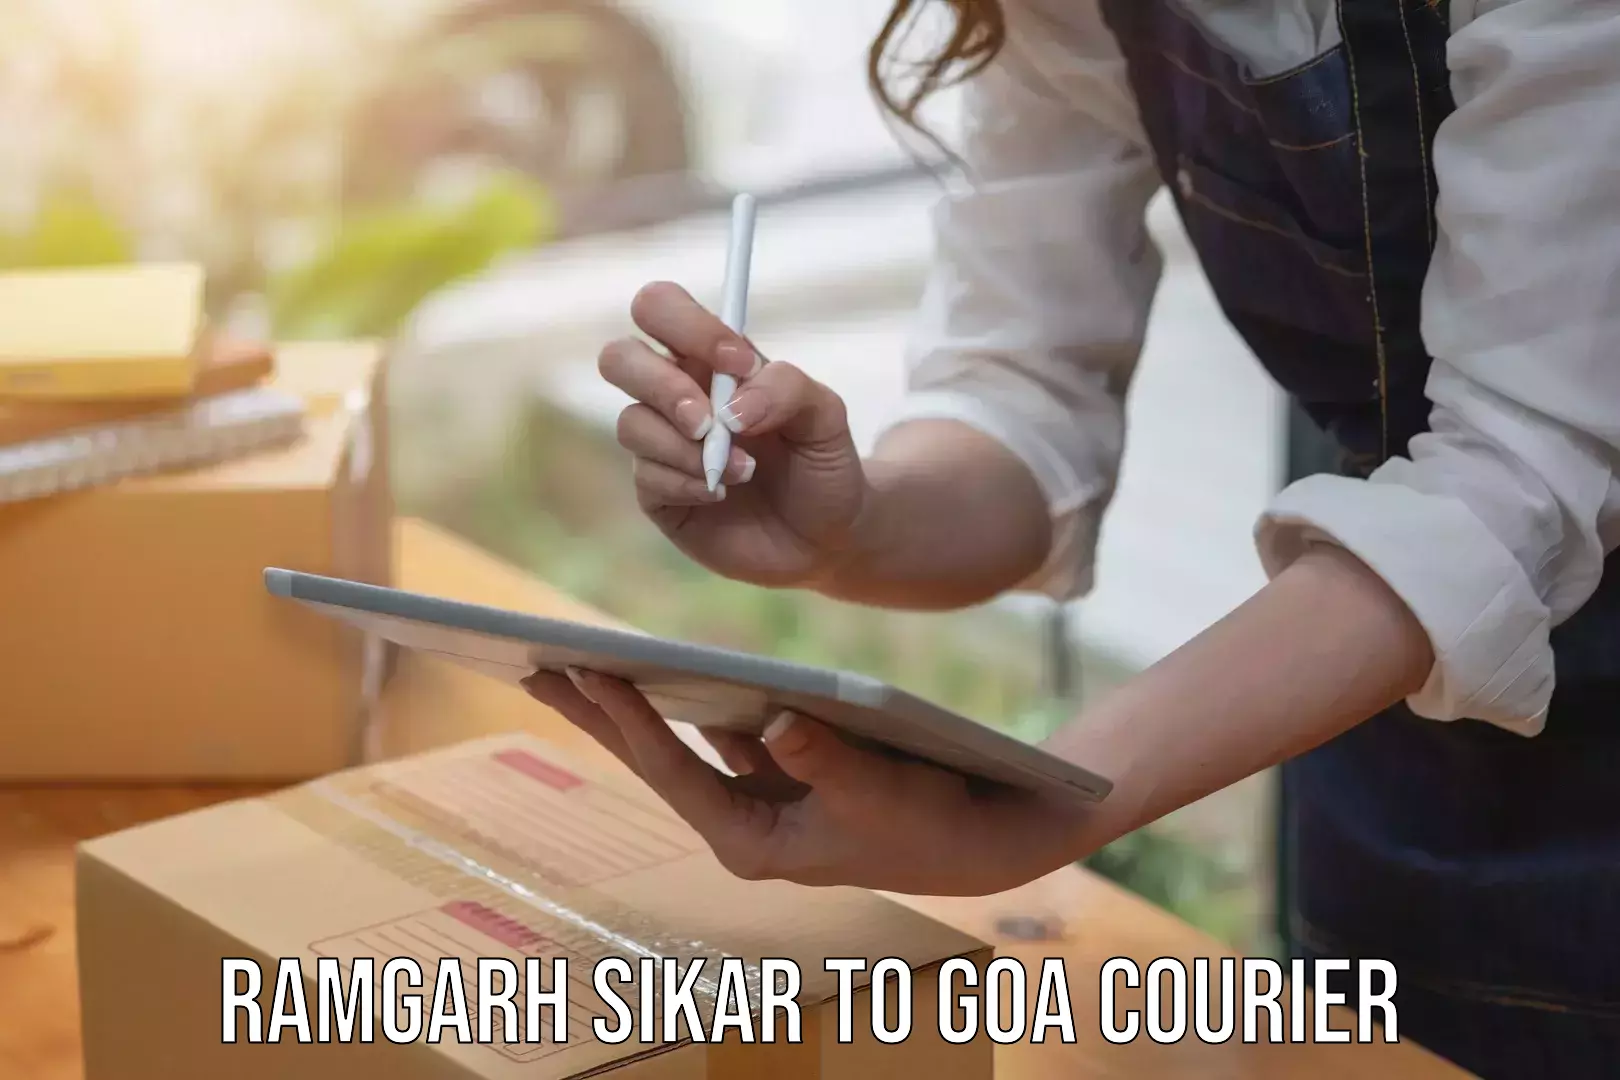 Courier service innovation Ramgarh Sikar to South Goa